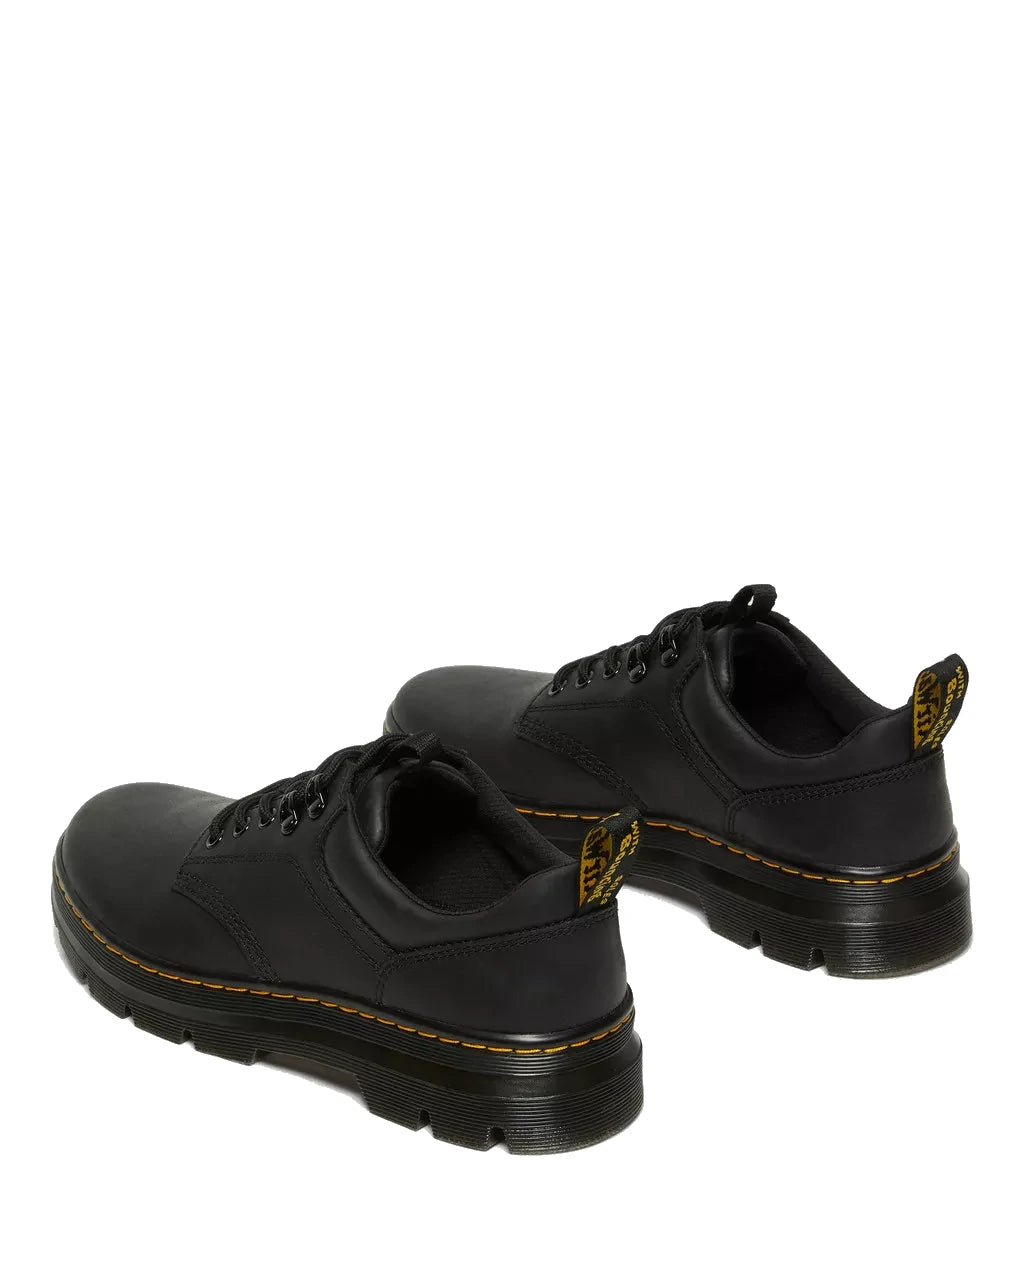 Dr Martens Men's Reeder Wyoming Leather Utility Shoes - Black